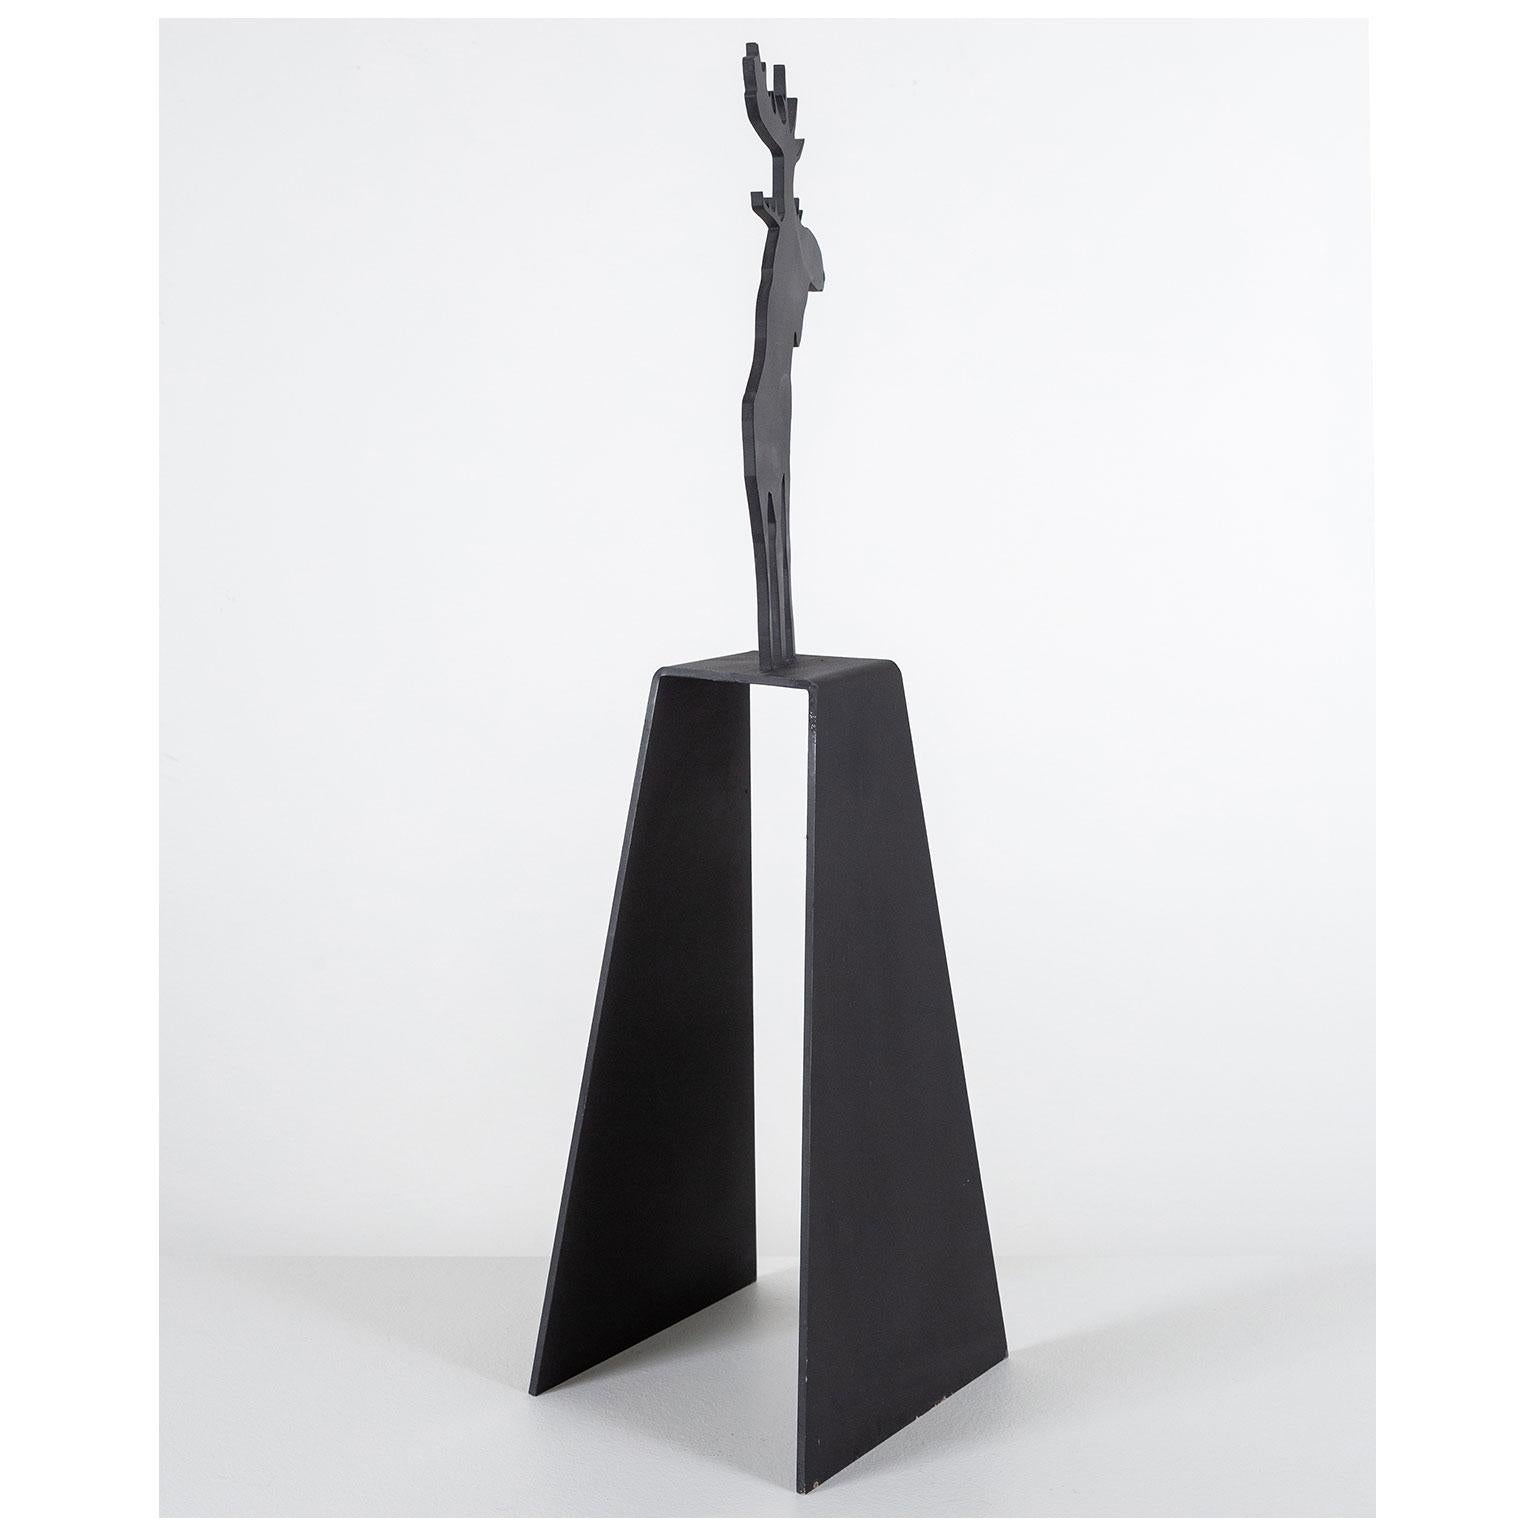 Mooseamour 26 - Sculpture de Charles Pachter